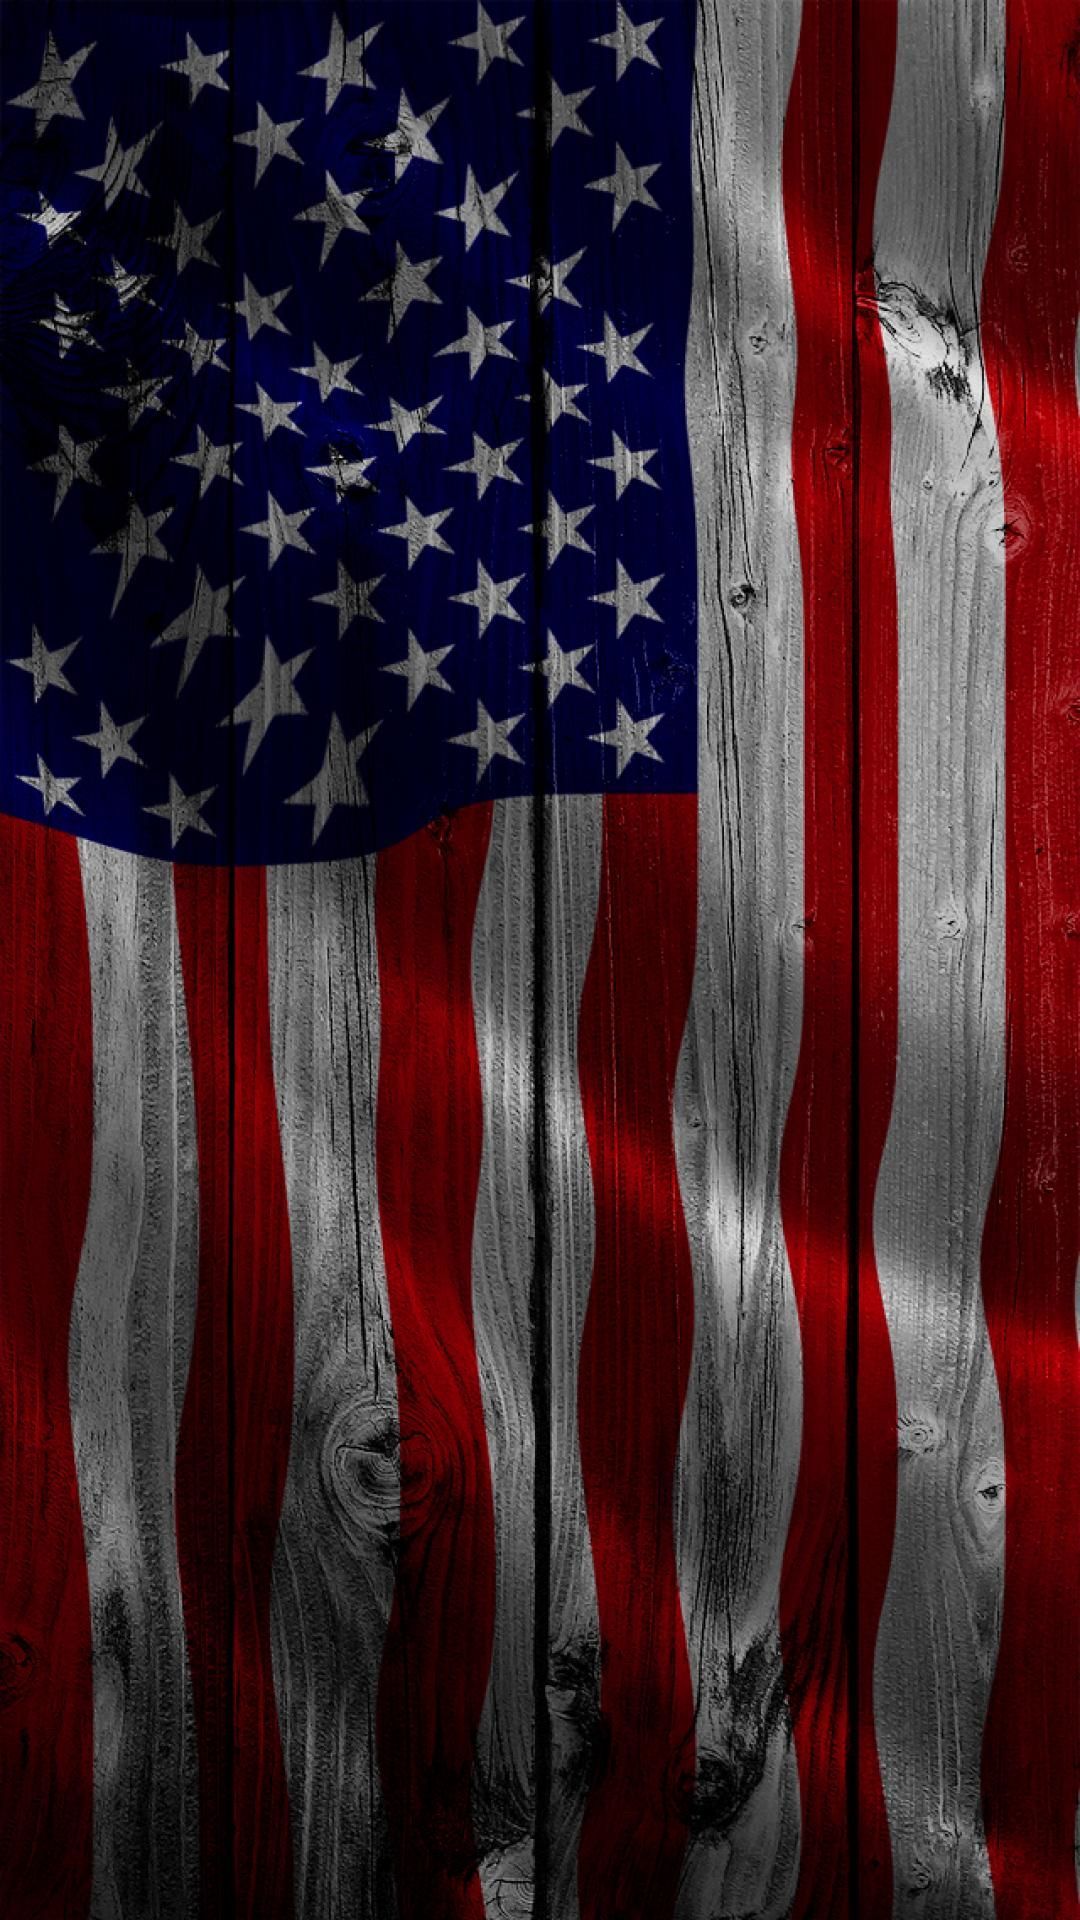 iphone 6 retina wallpaper. American flag wallpaper iphone, American flag wallpaper, Usa flag wallpaper